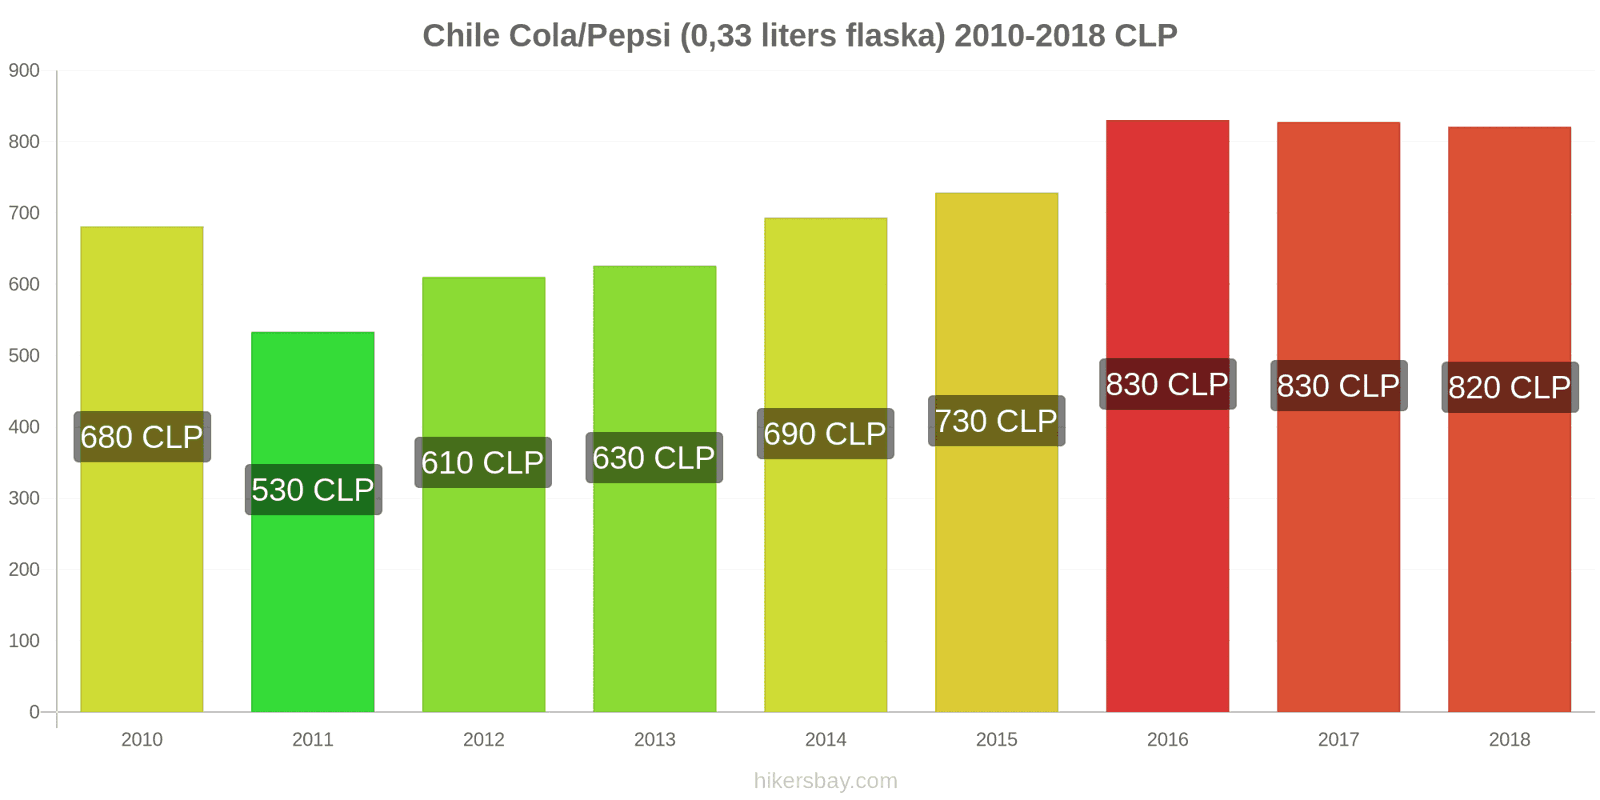 Chile prisändringar Coca-Cola/Pepsi (0.33 liters flaska) hikersbay.com